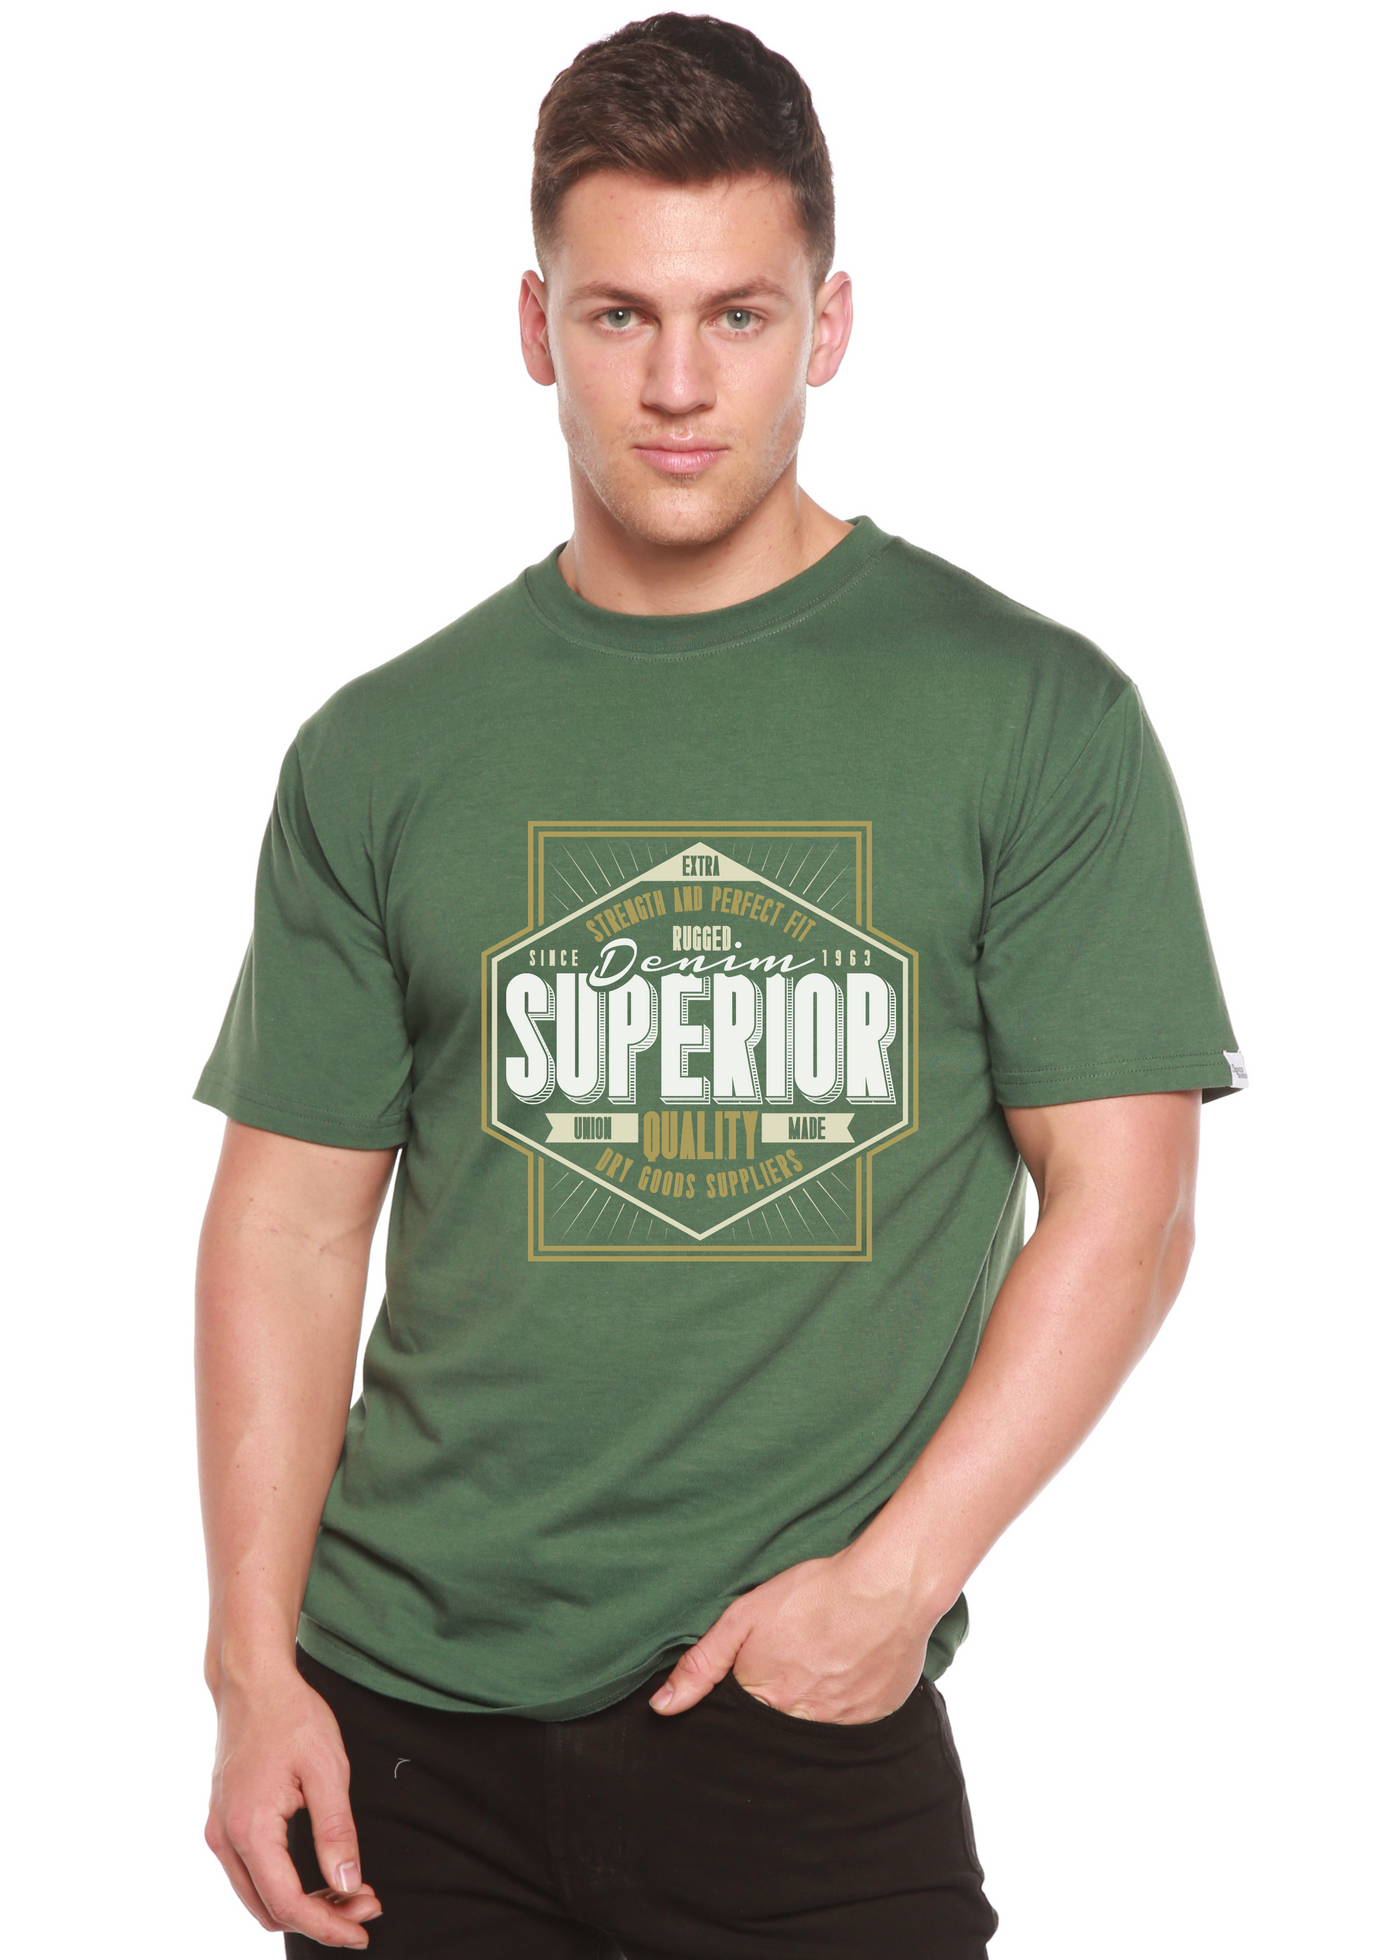 Superior Quality men's bamboo tshirt pine green